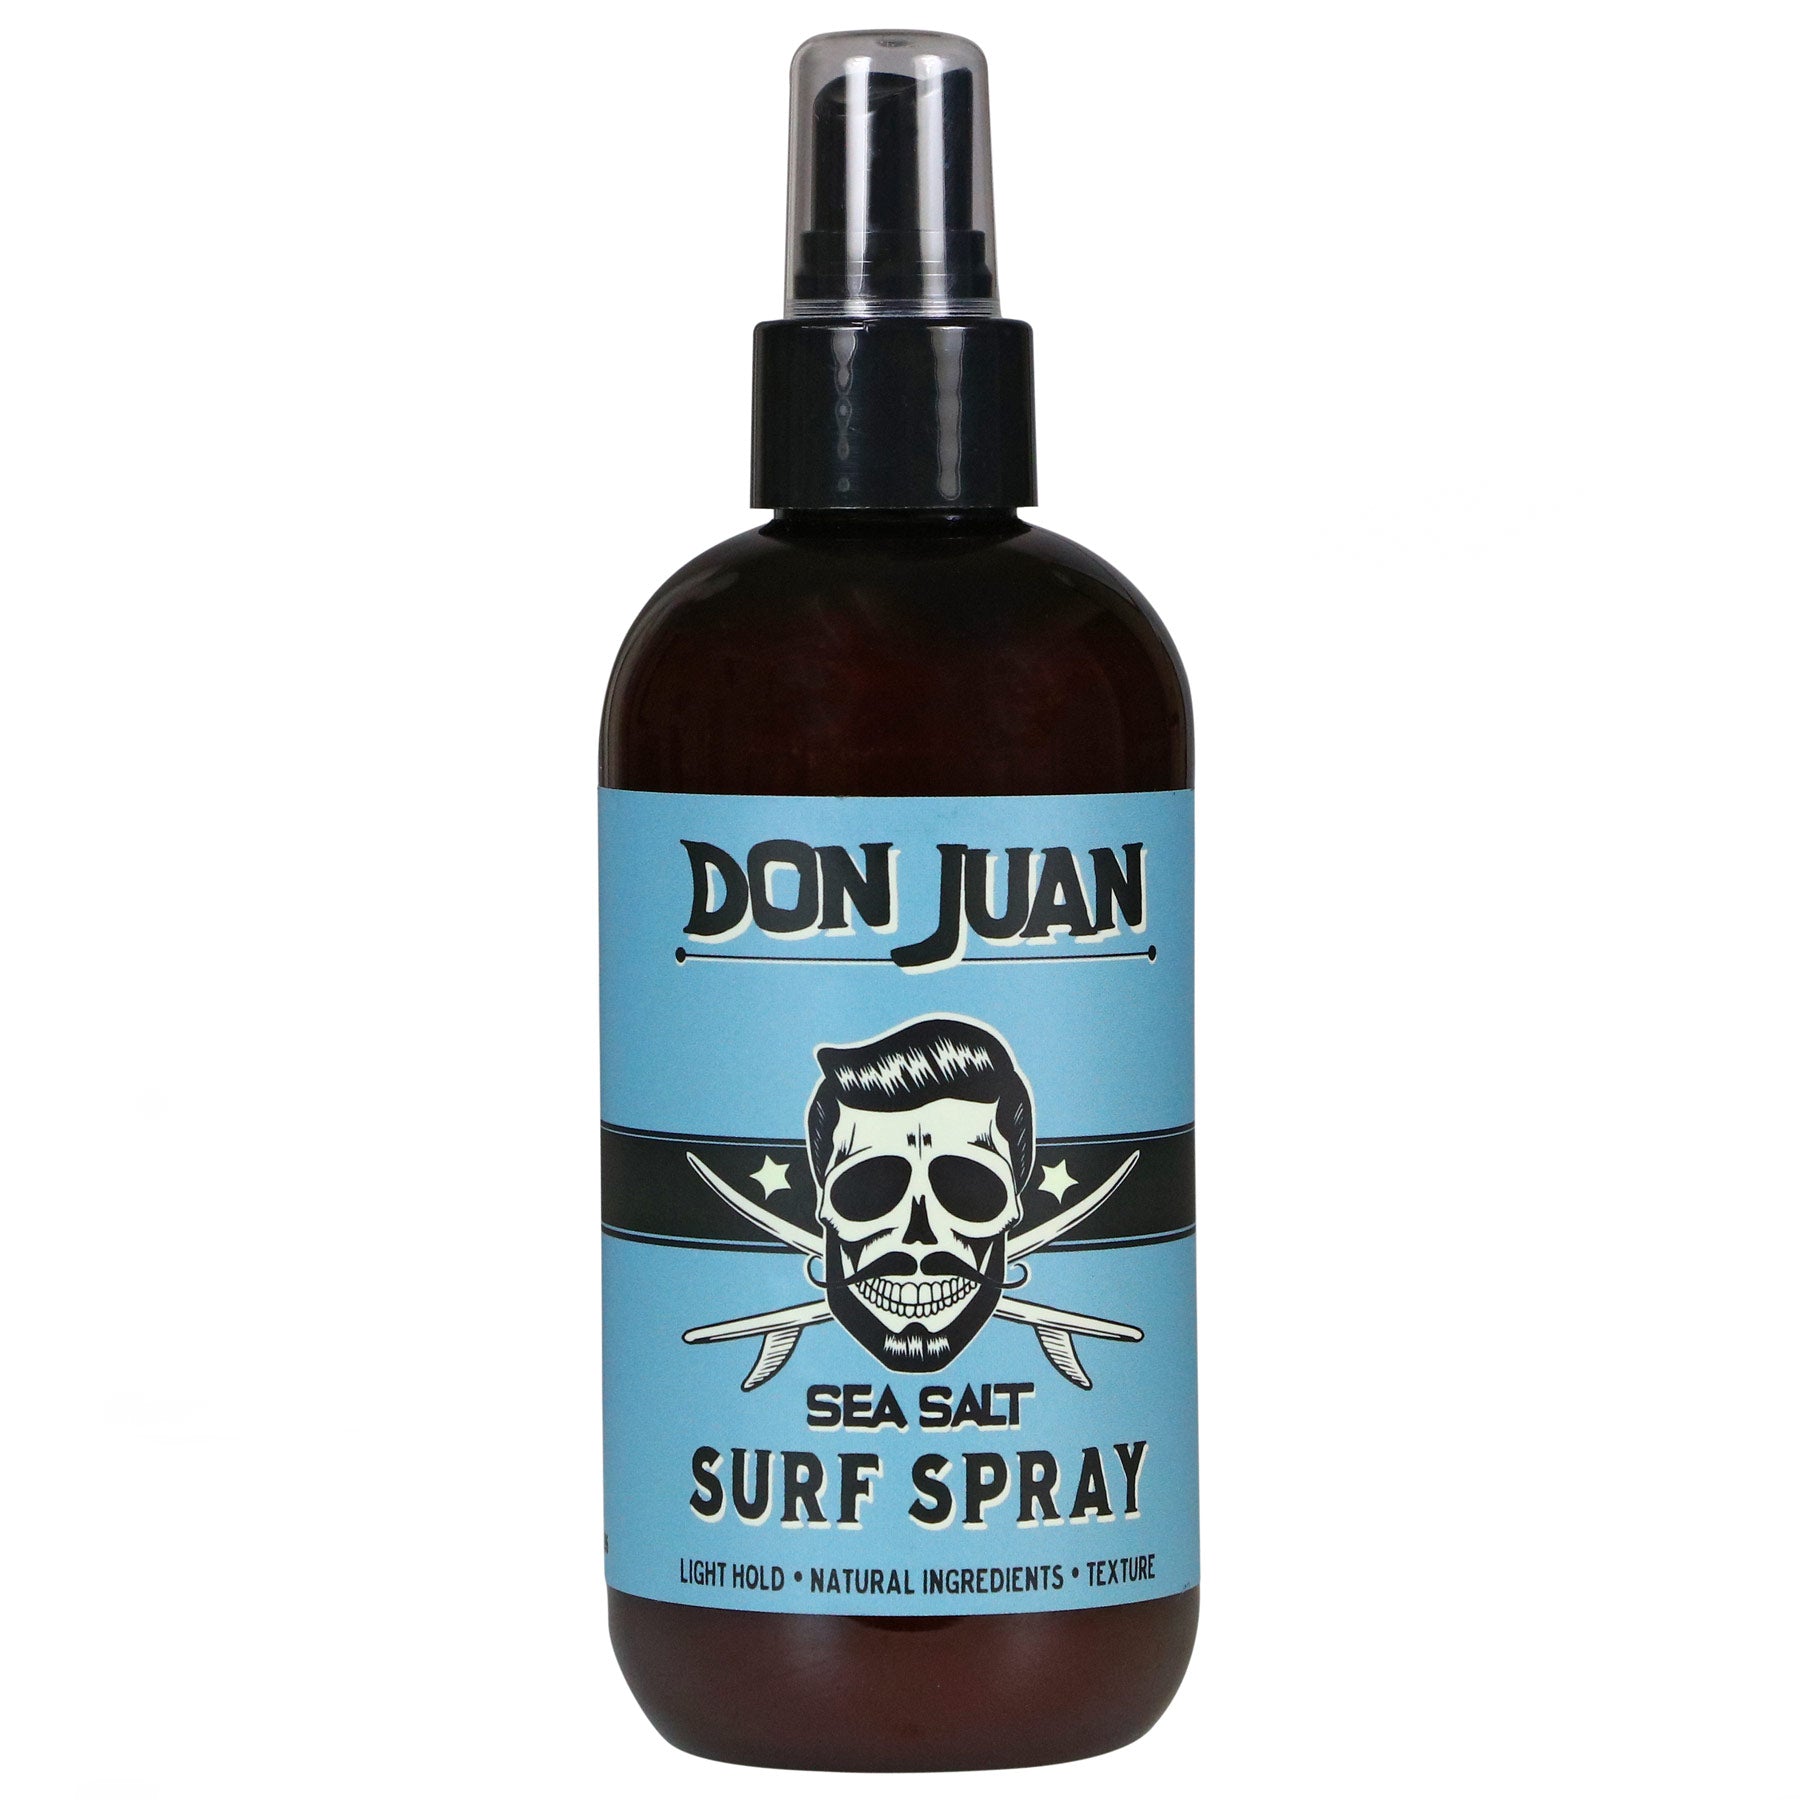 Don Juan Sea Salt Surf Spray